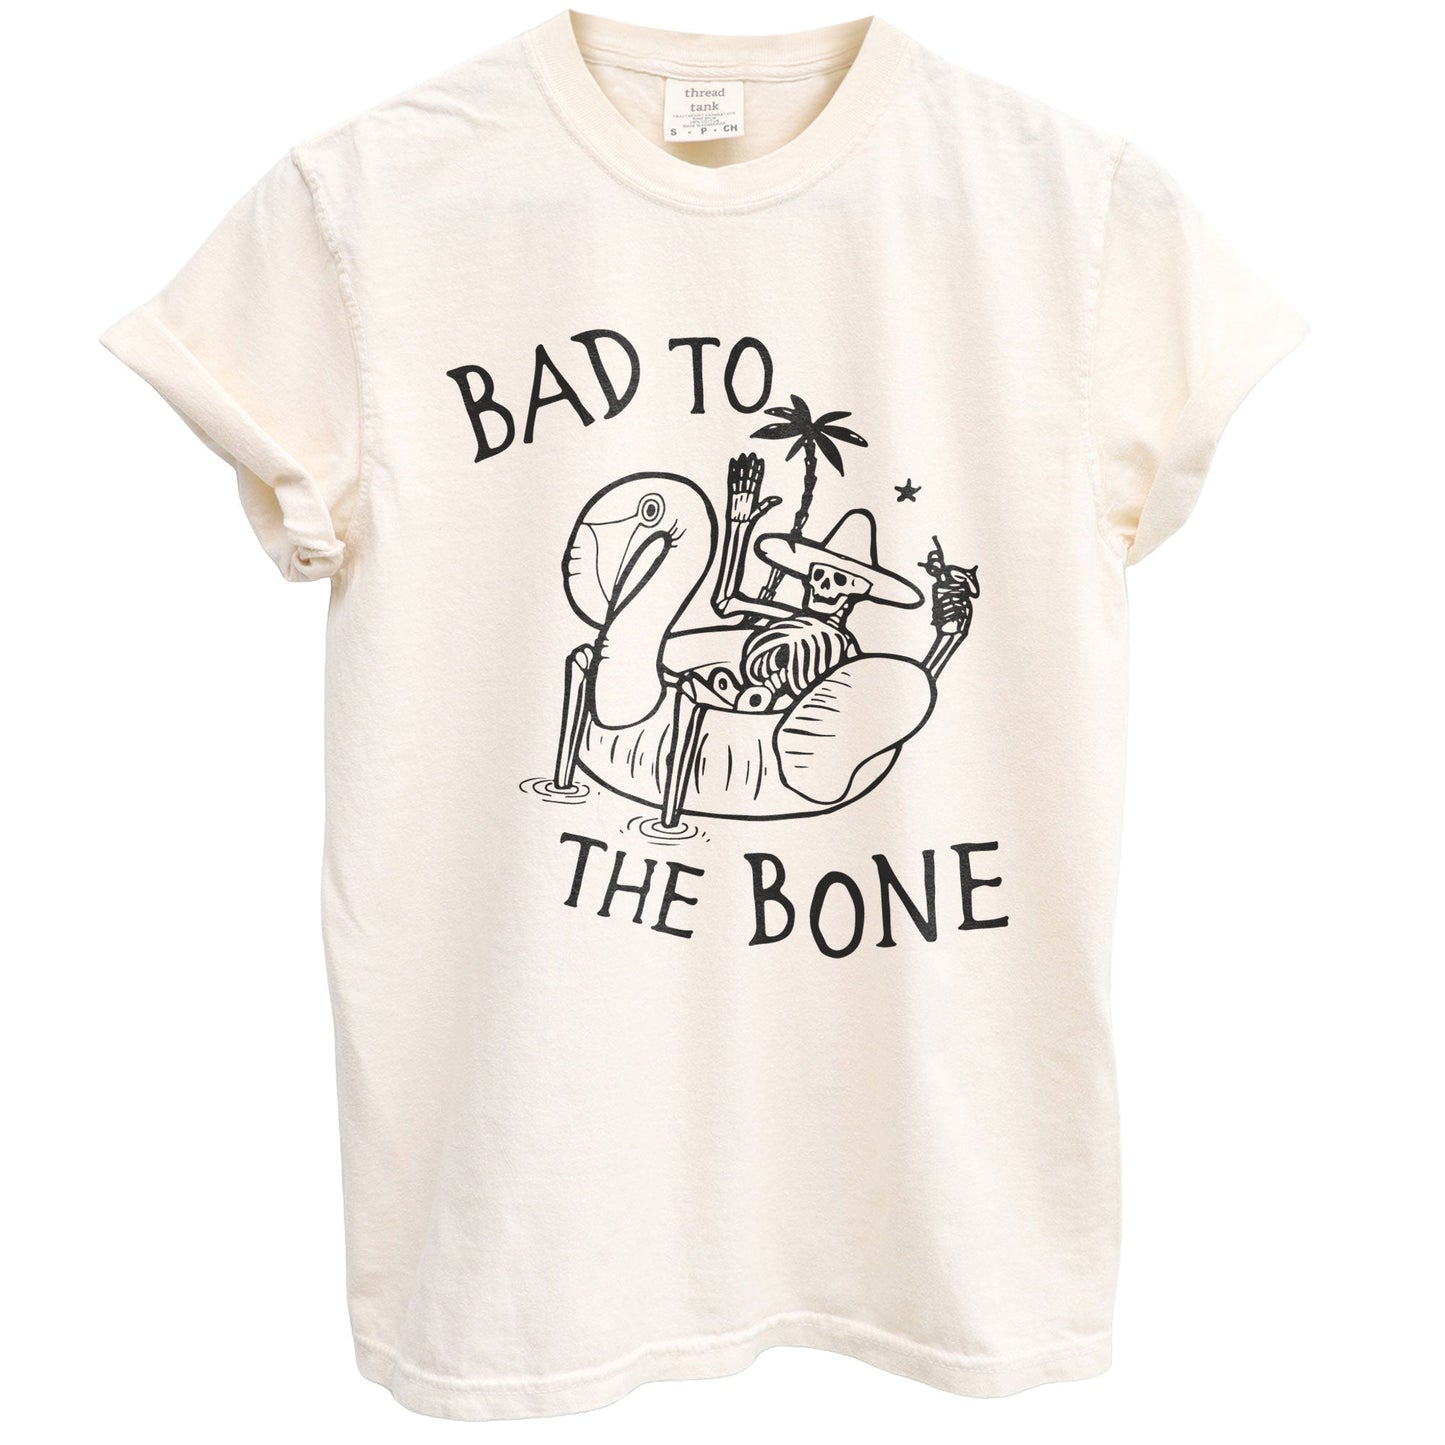 Bad To The Bone